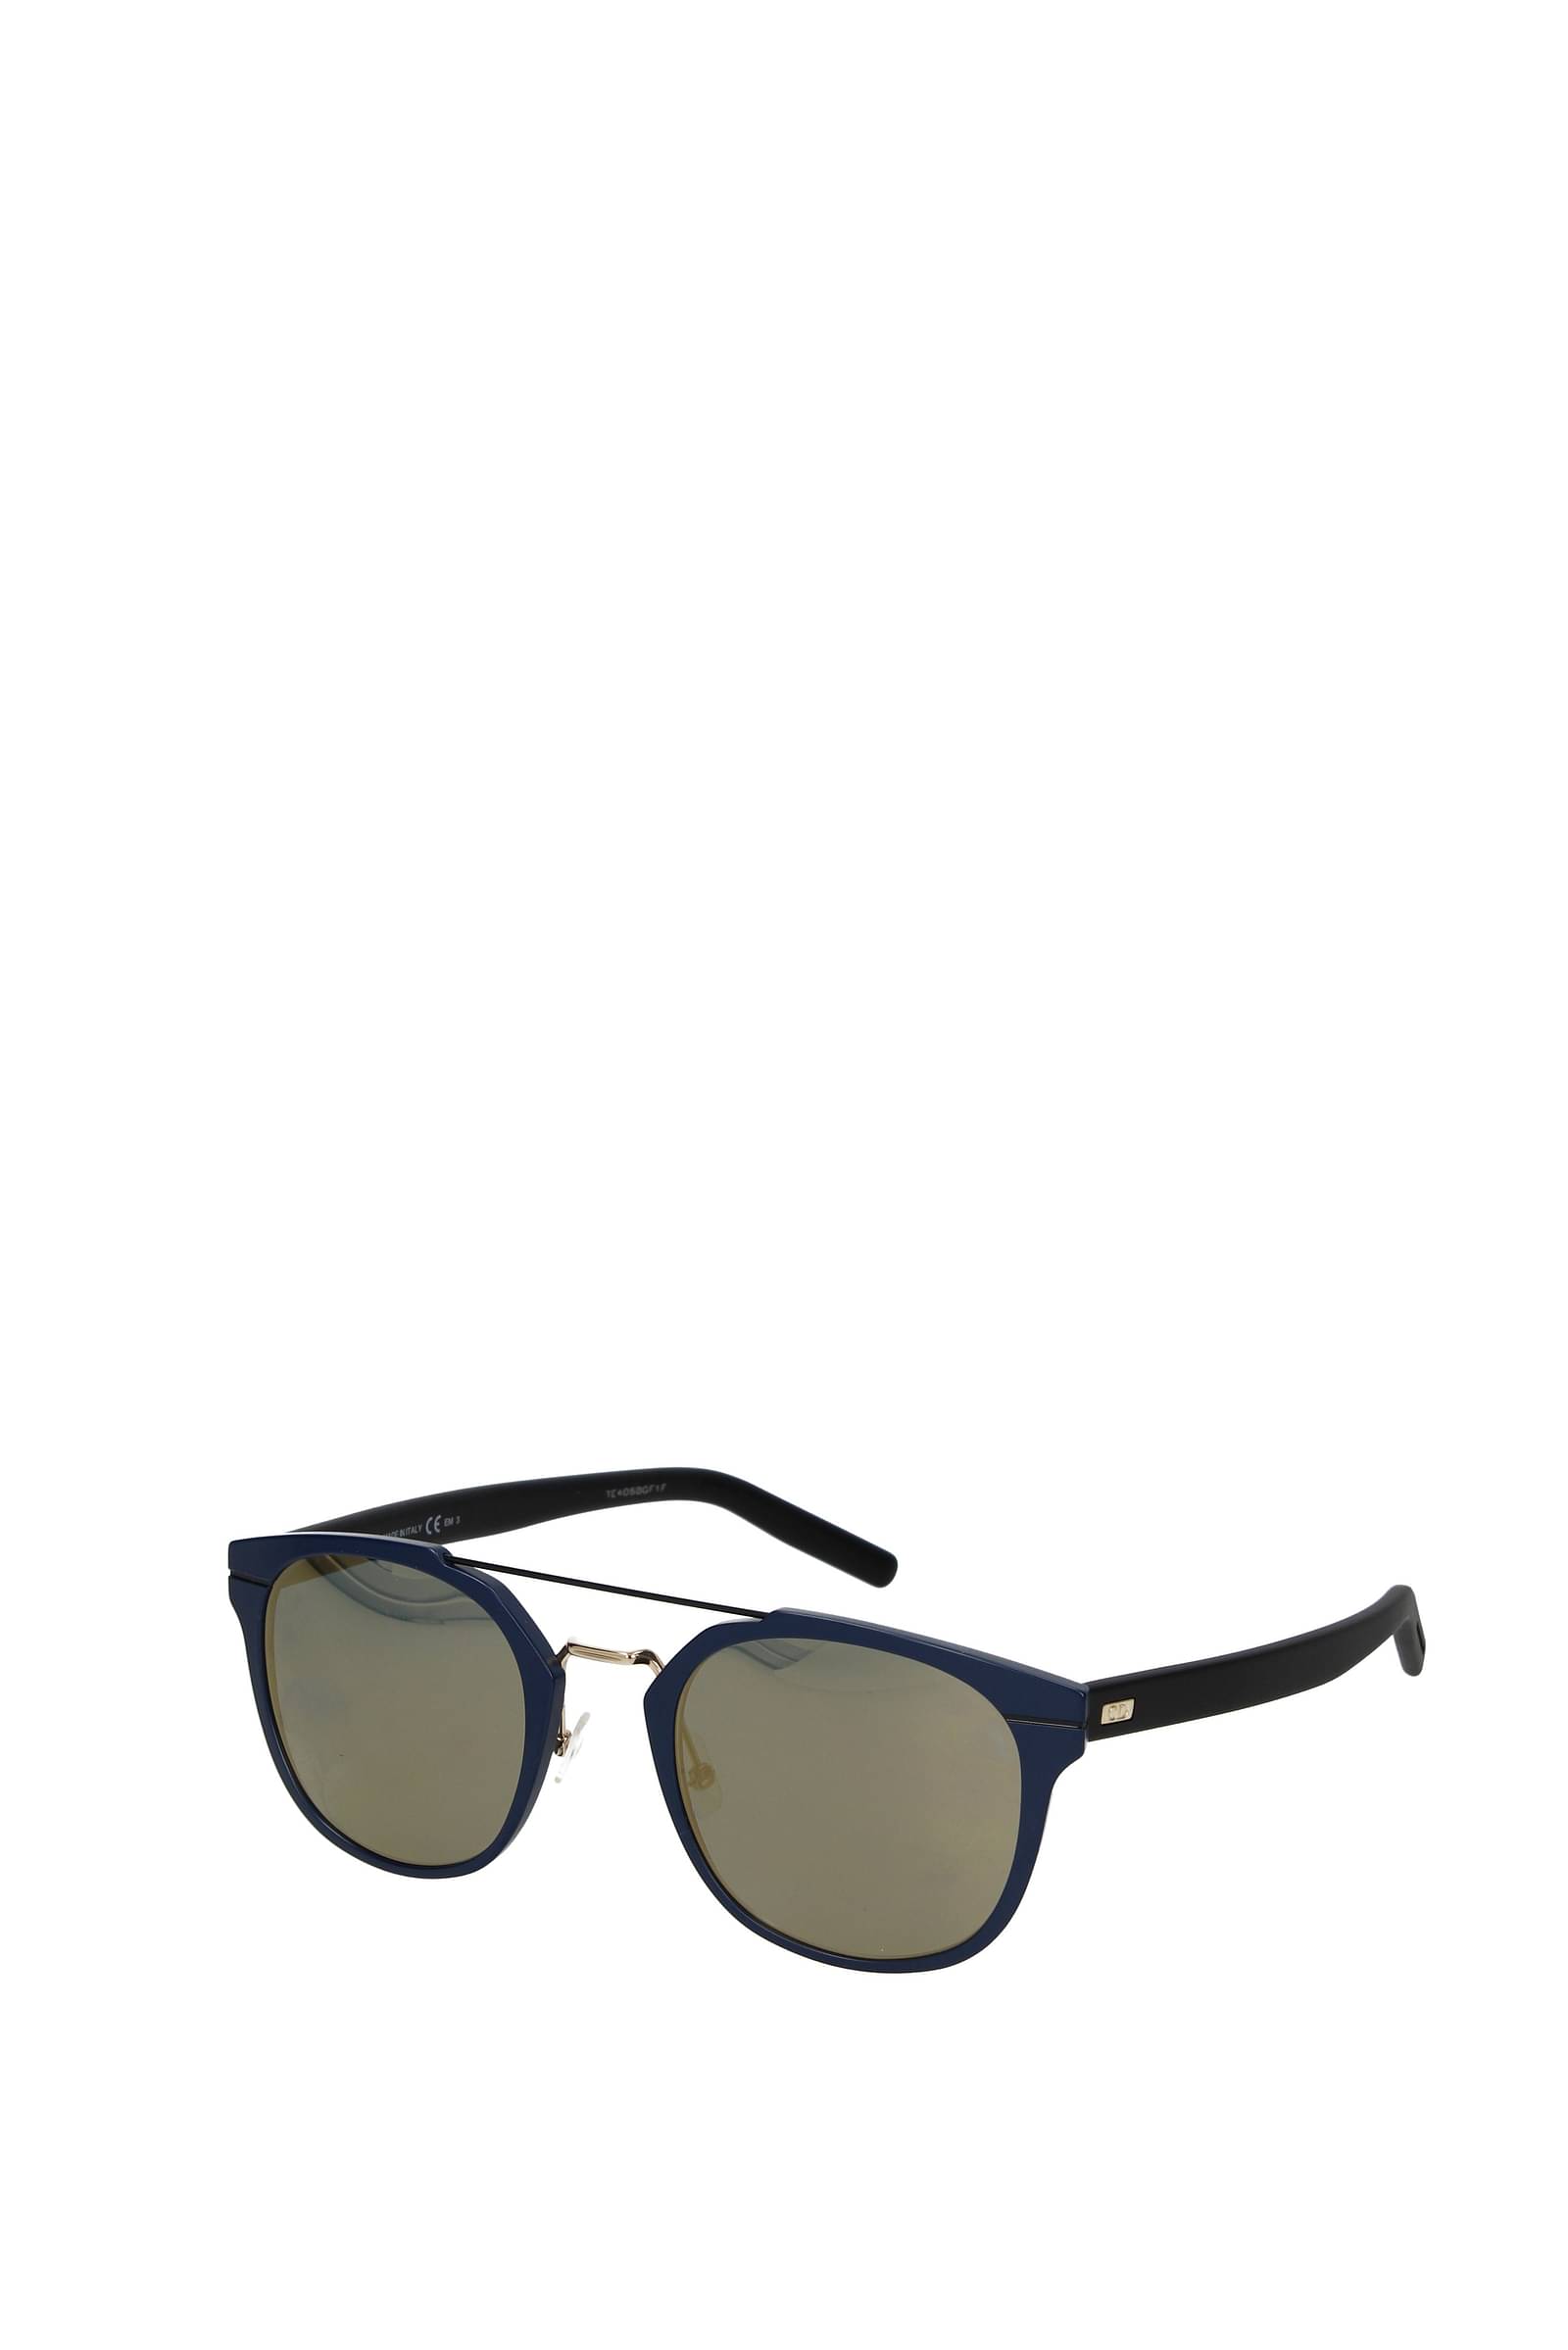 Christian Dior Signature S1U Sunglasses